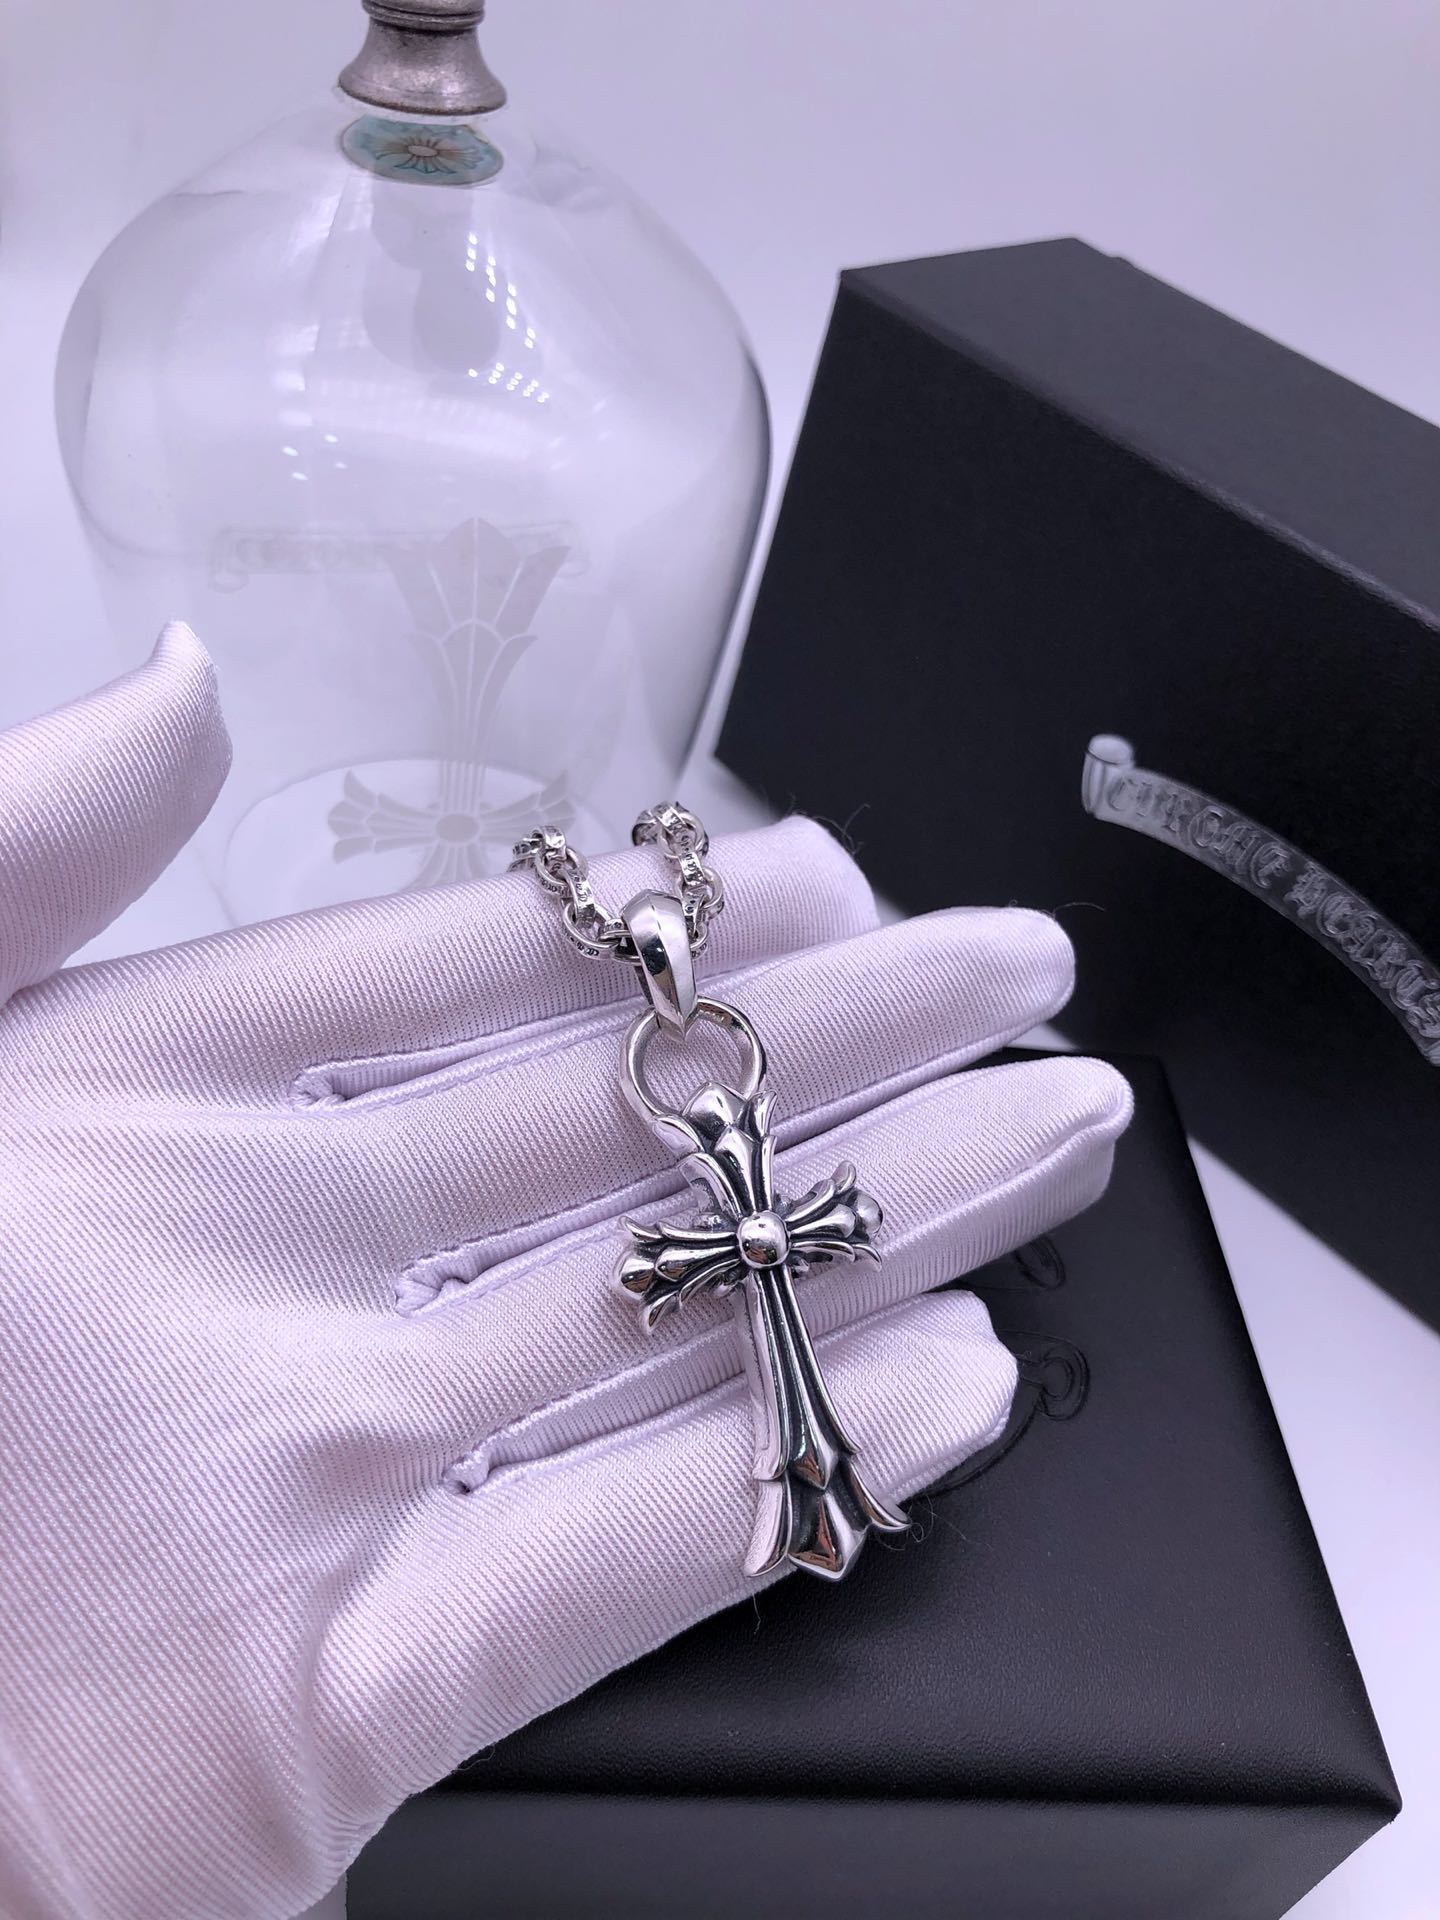 Chrome Hearts Jewelry Necklaces & Pendants Replica Shop
 925 Silver